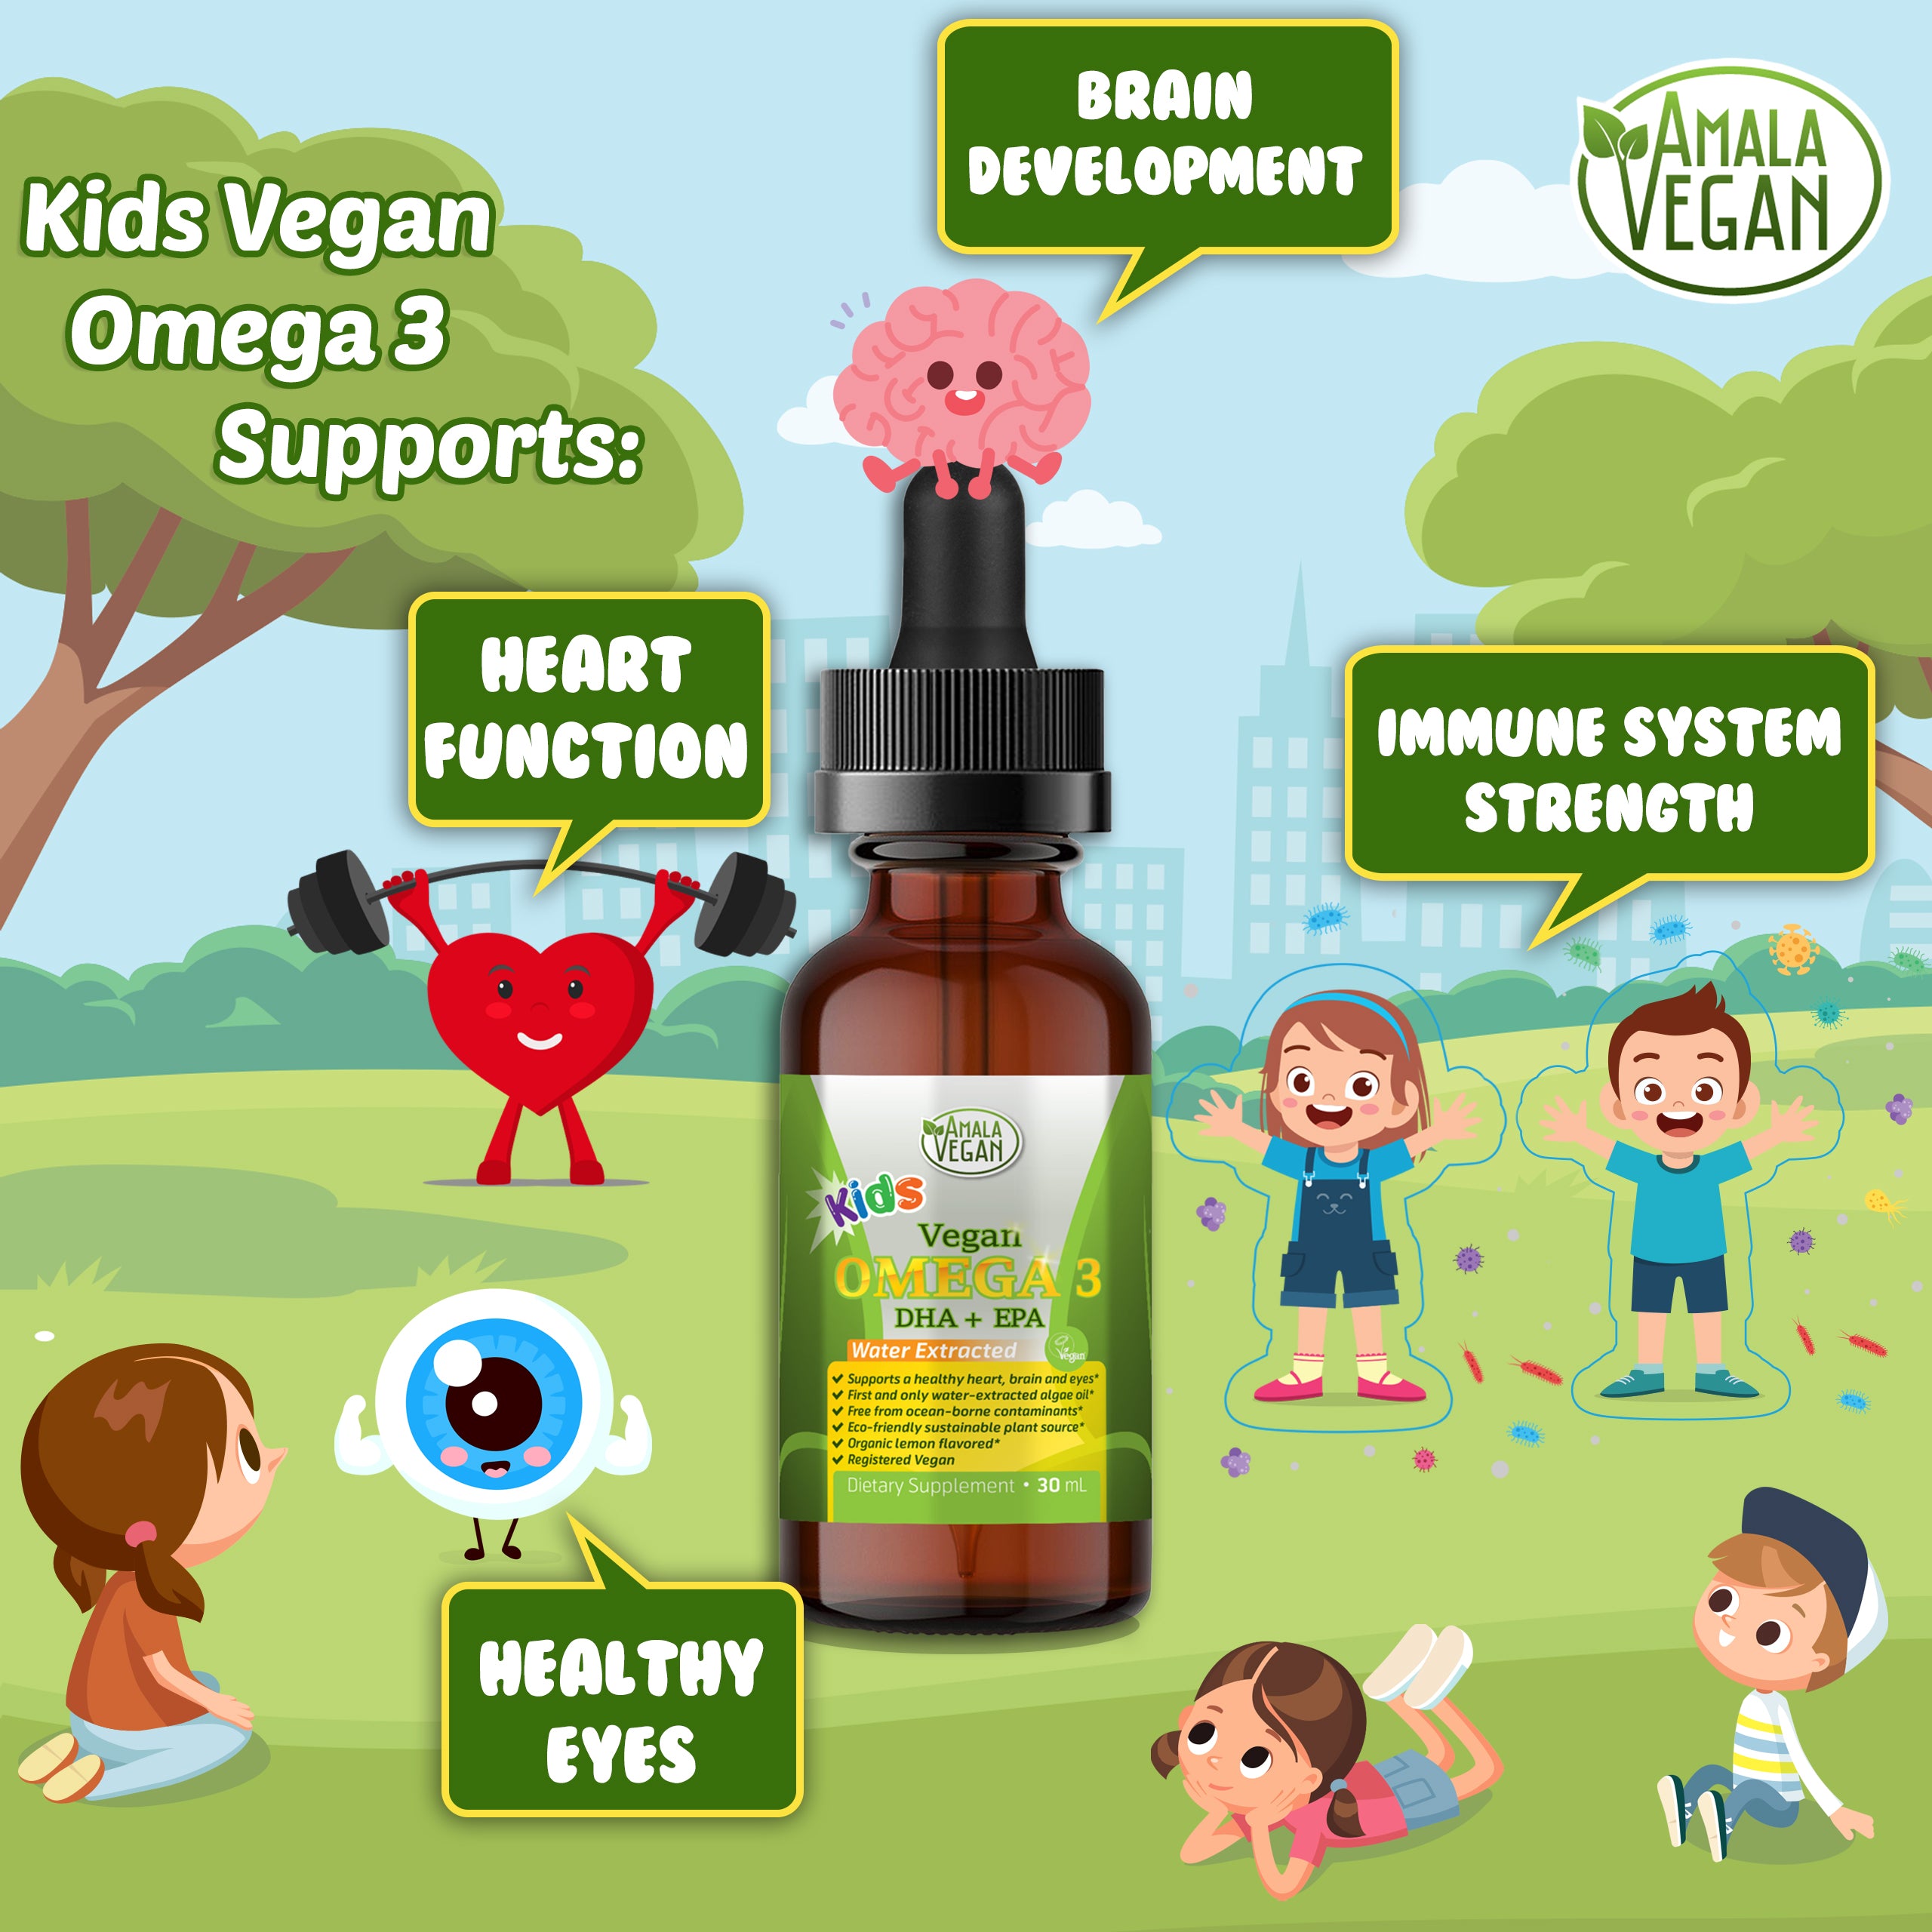 vegan omega 3 supplements